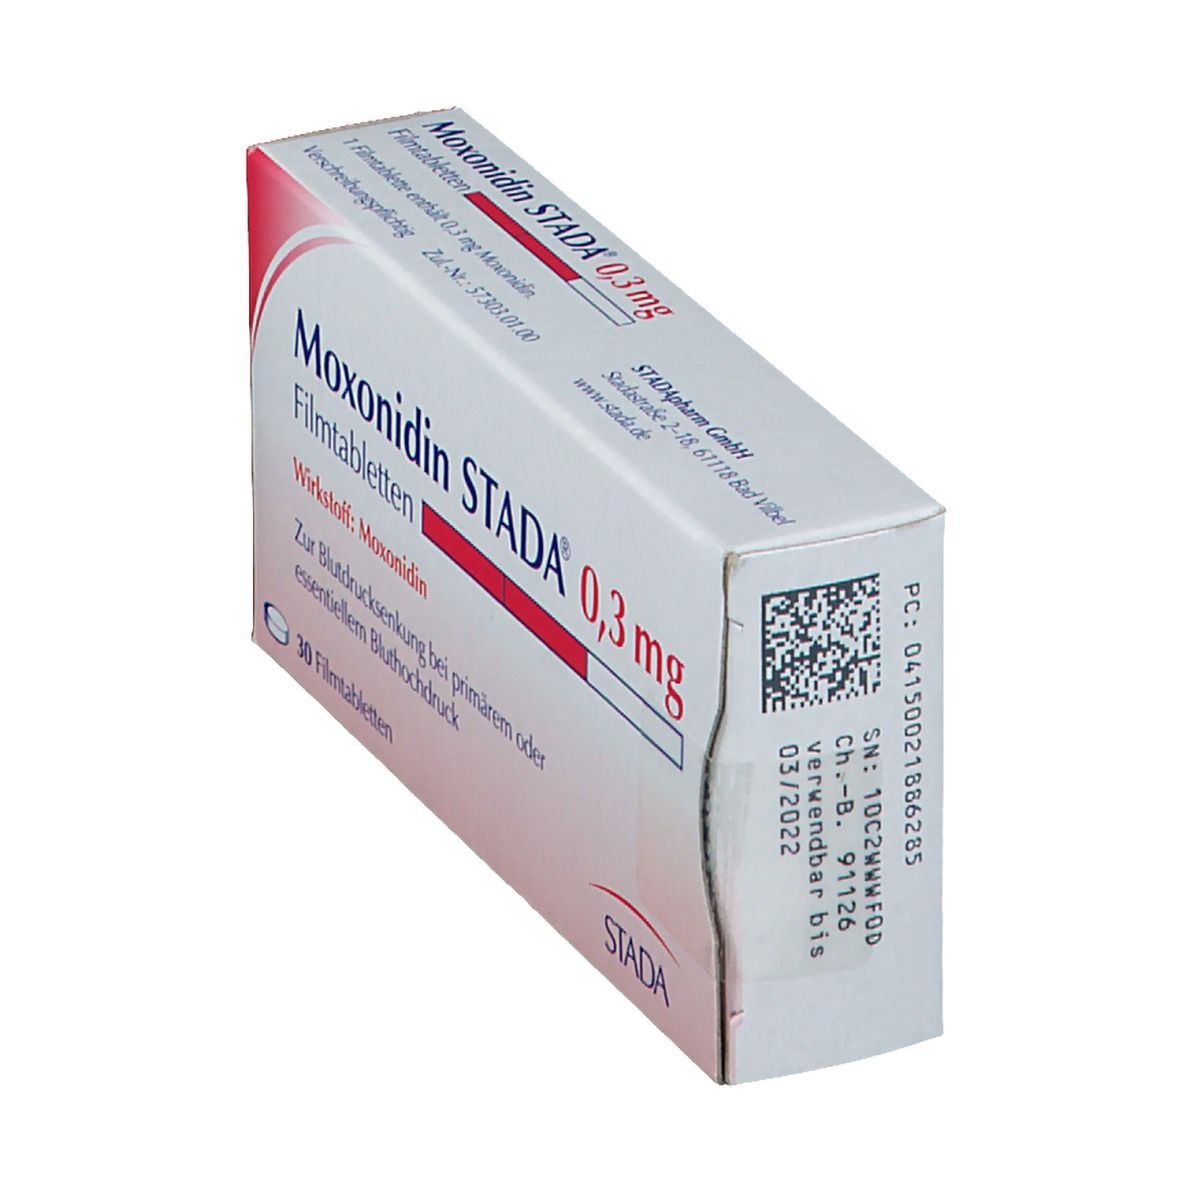 Moxonidin STADA® 0,3 mg